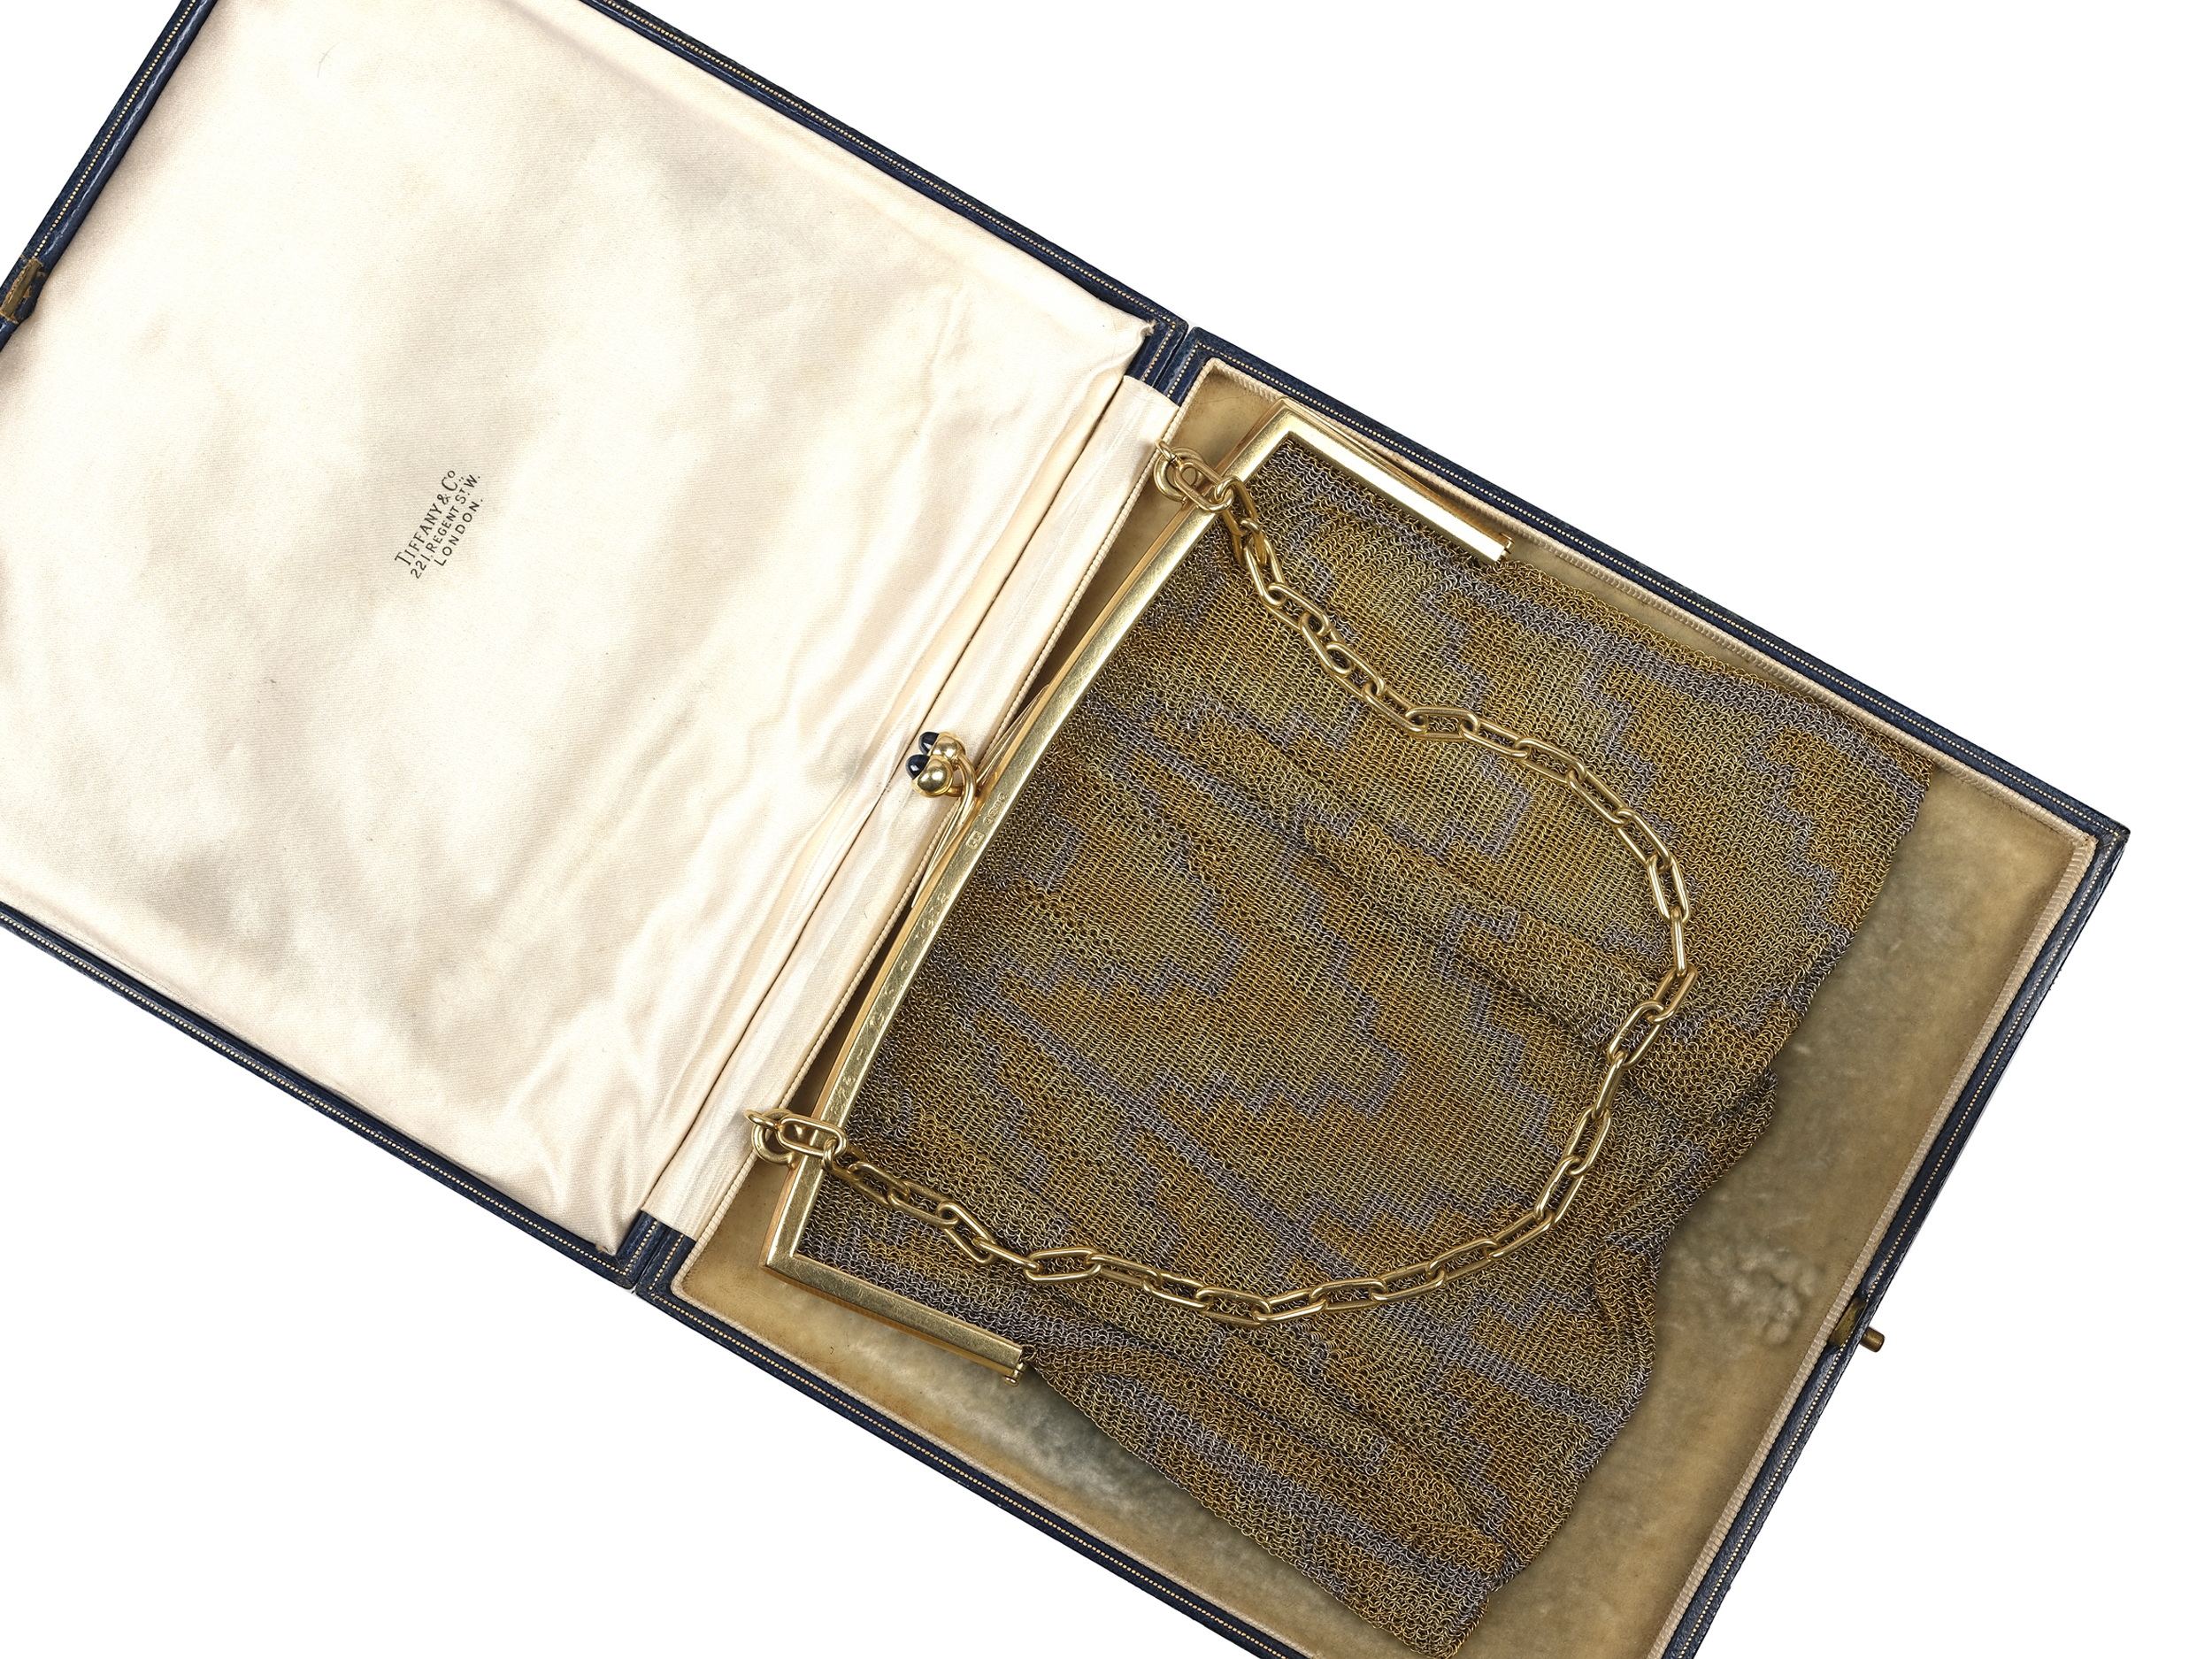 Tiffany & Co, evening bag - Image 5 of 7